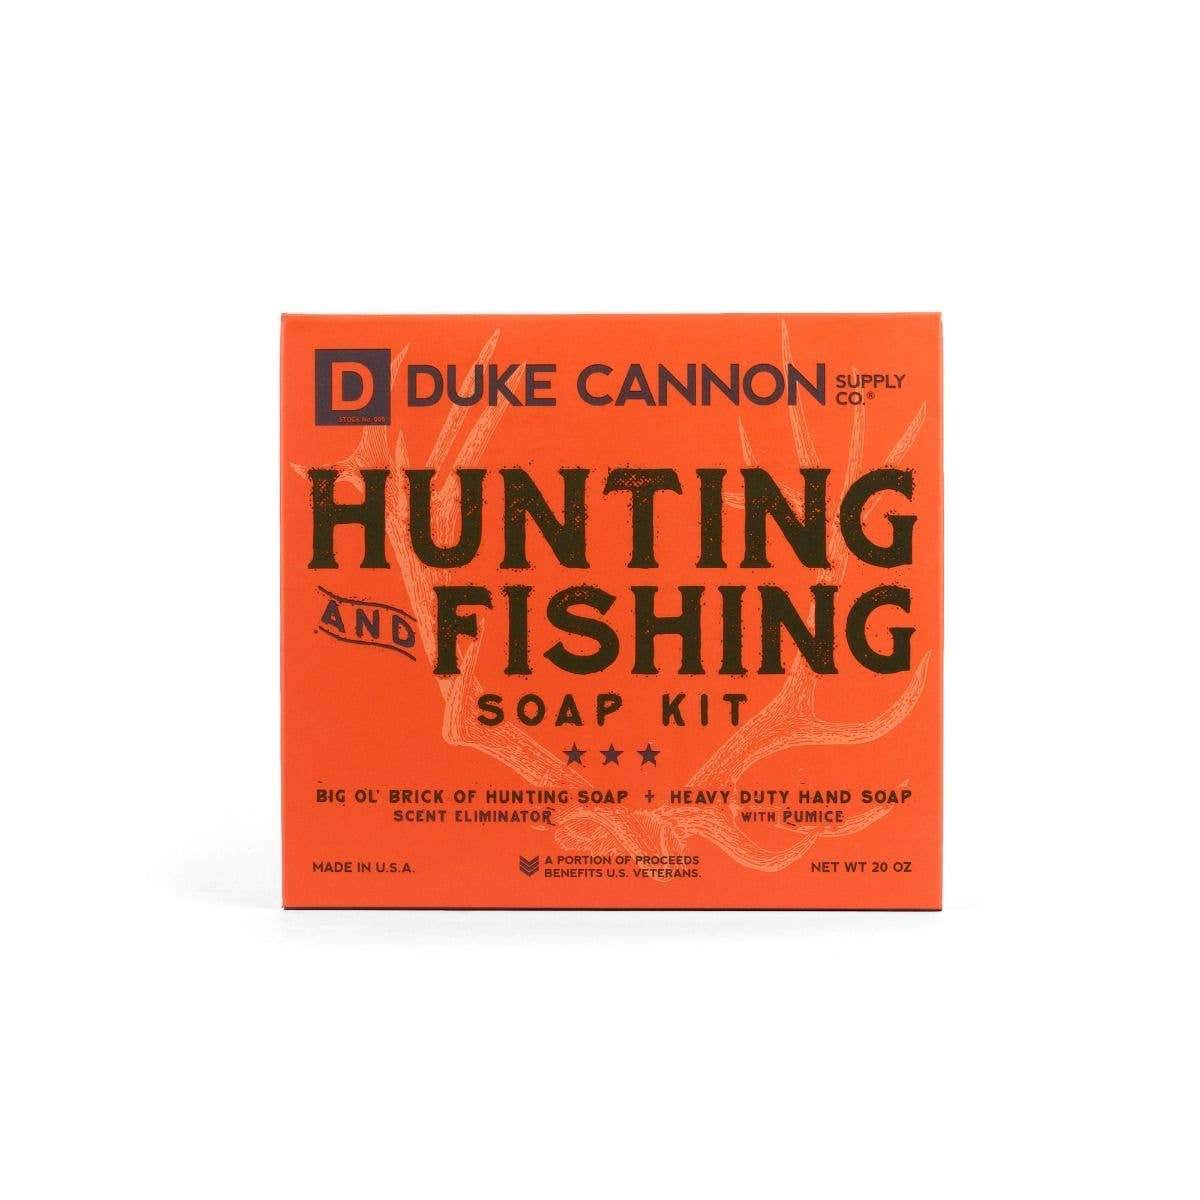 * Duke Cannon hunting and fishing soap kit